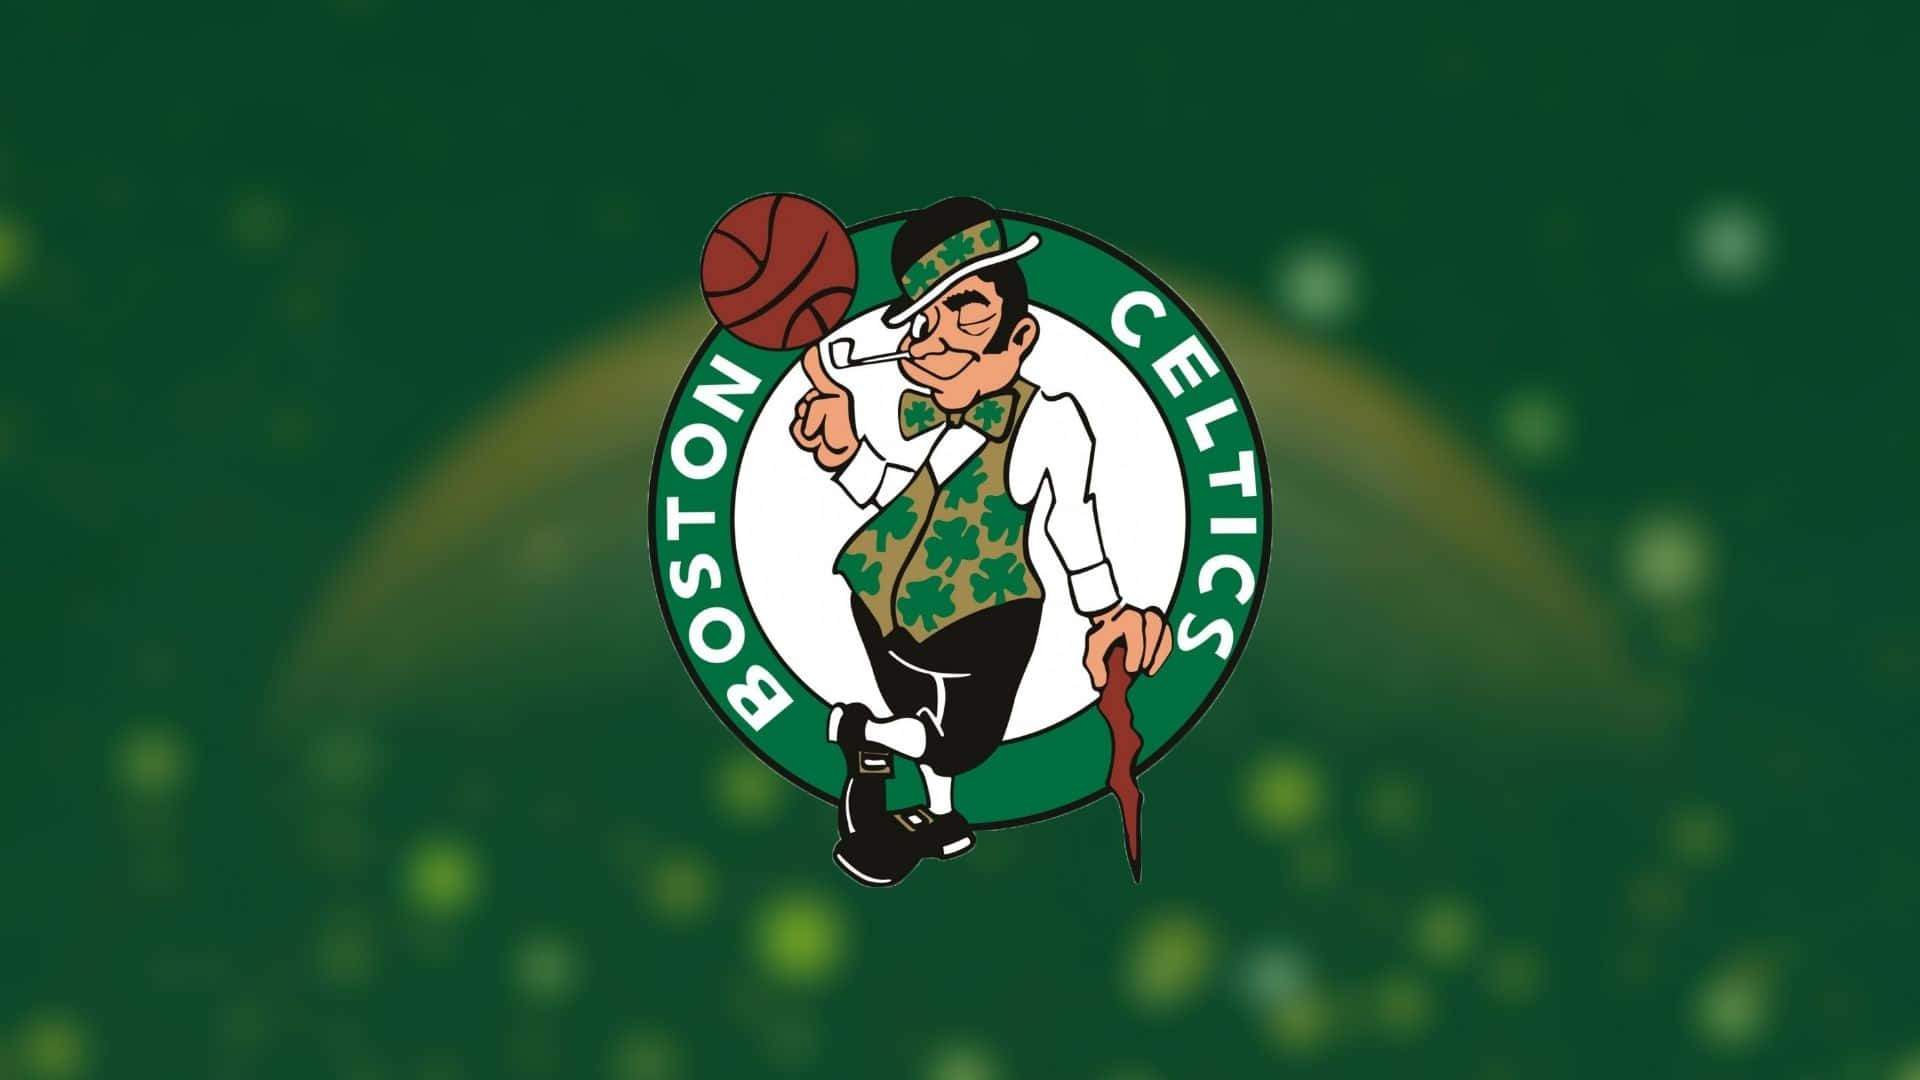 The Boston Celtics [Following their] 5th NBA Championship Victory Wallpaper